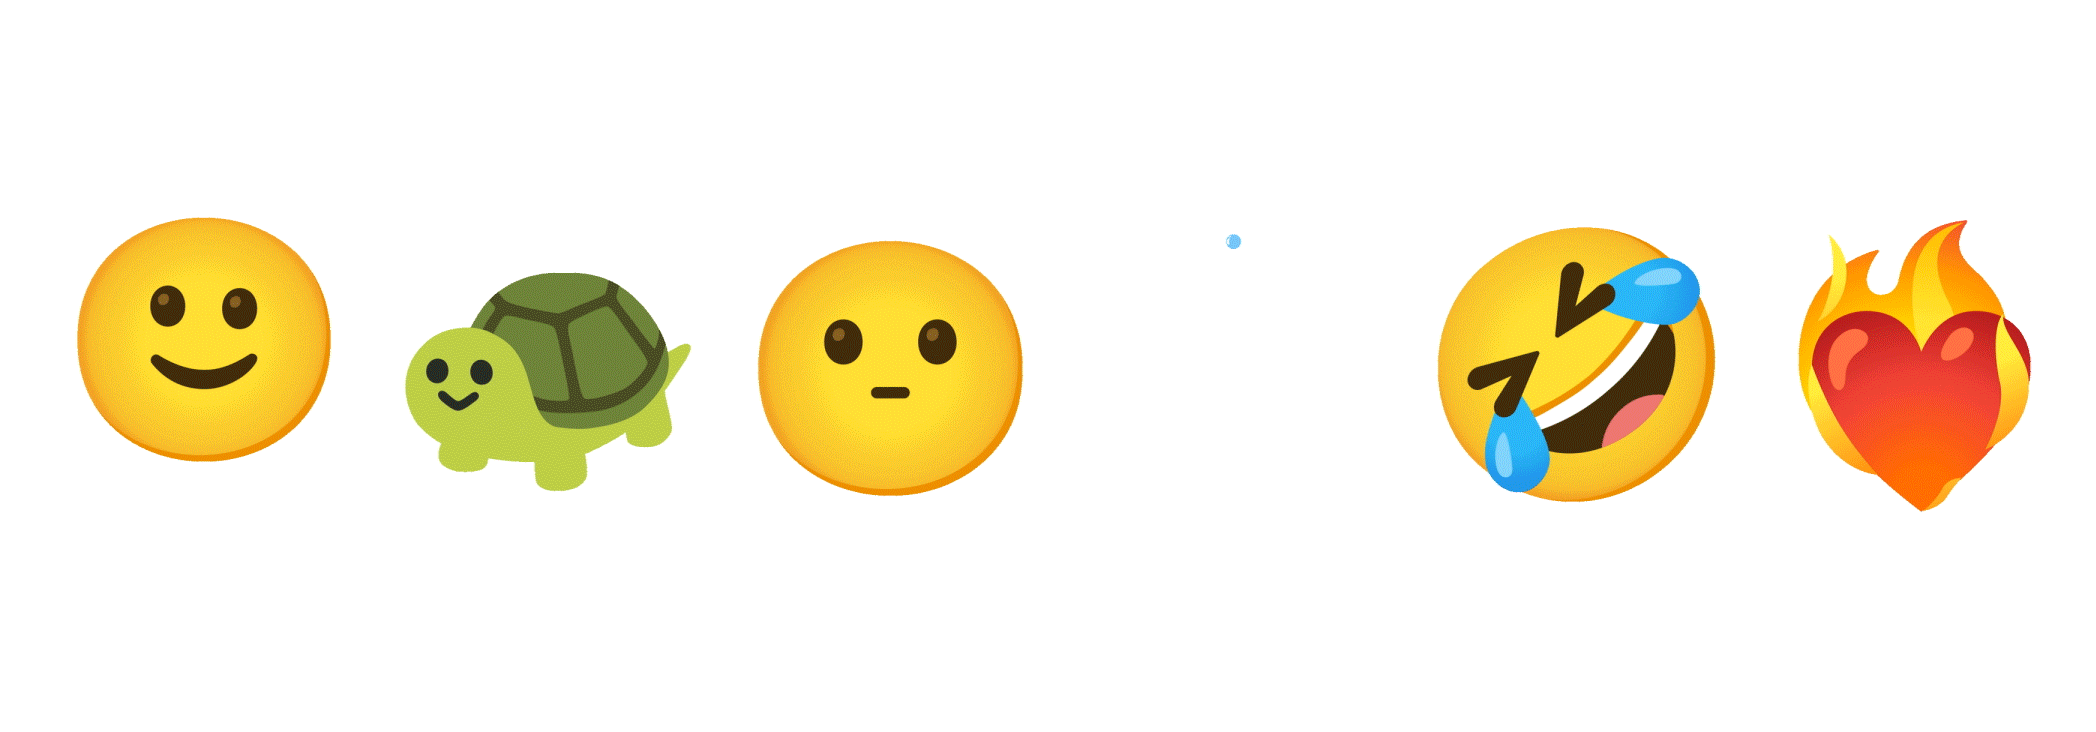 Emoji 15, Animation, Personalization: Google announces beautiful things for emoji